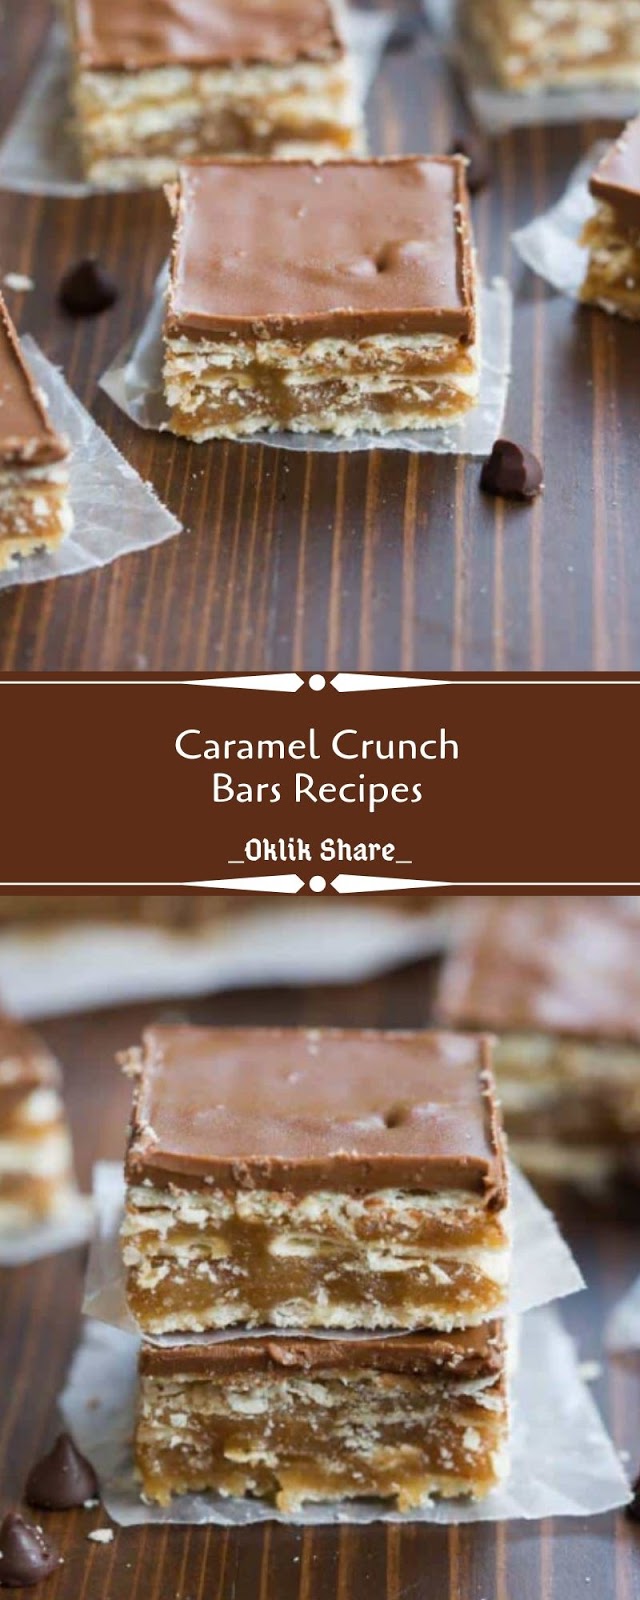 Caramel Crunch Bars Recipes